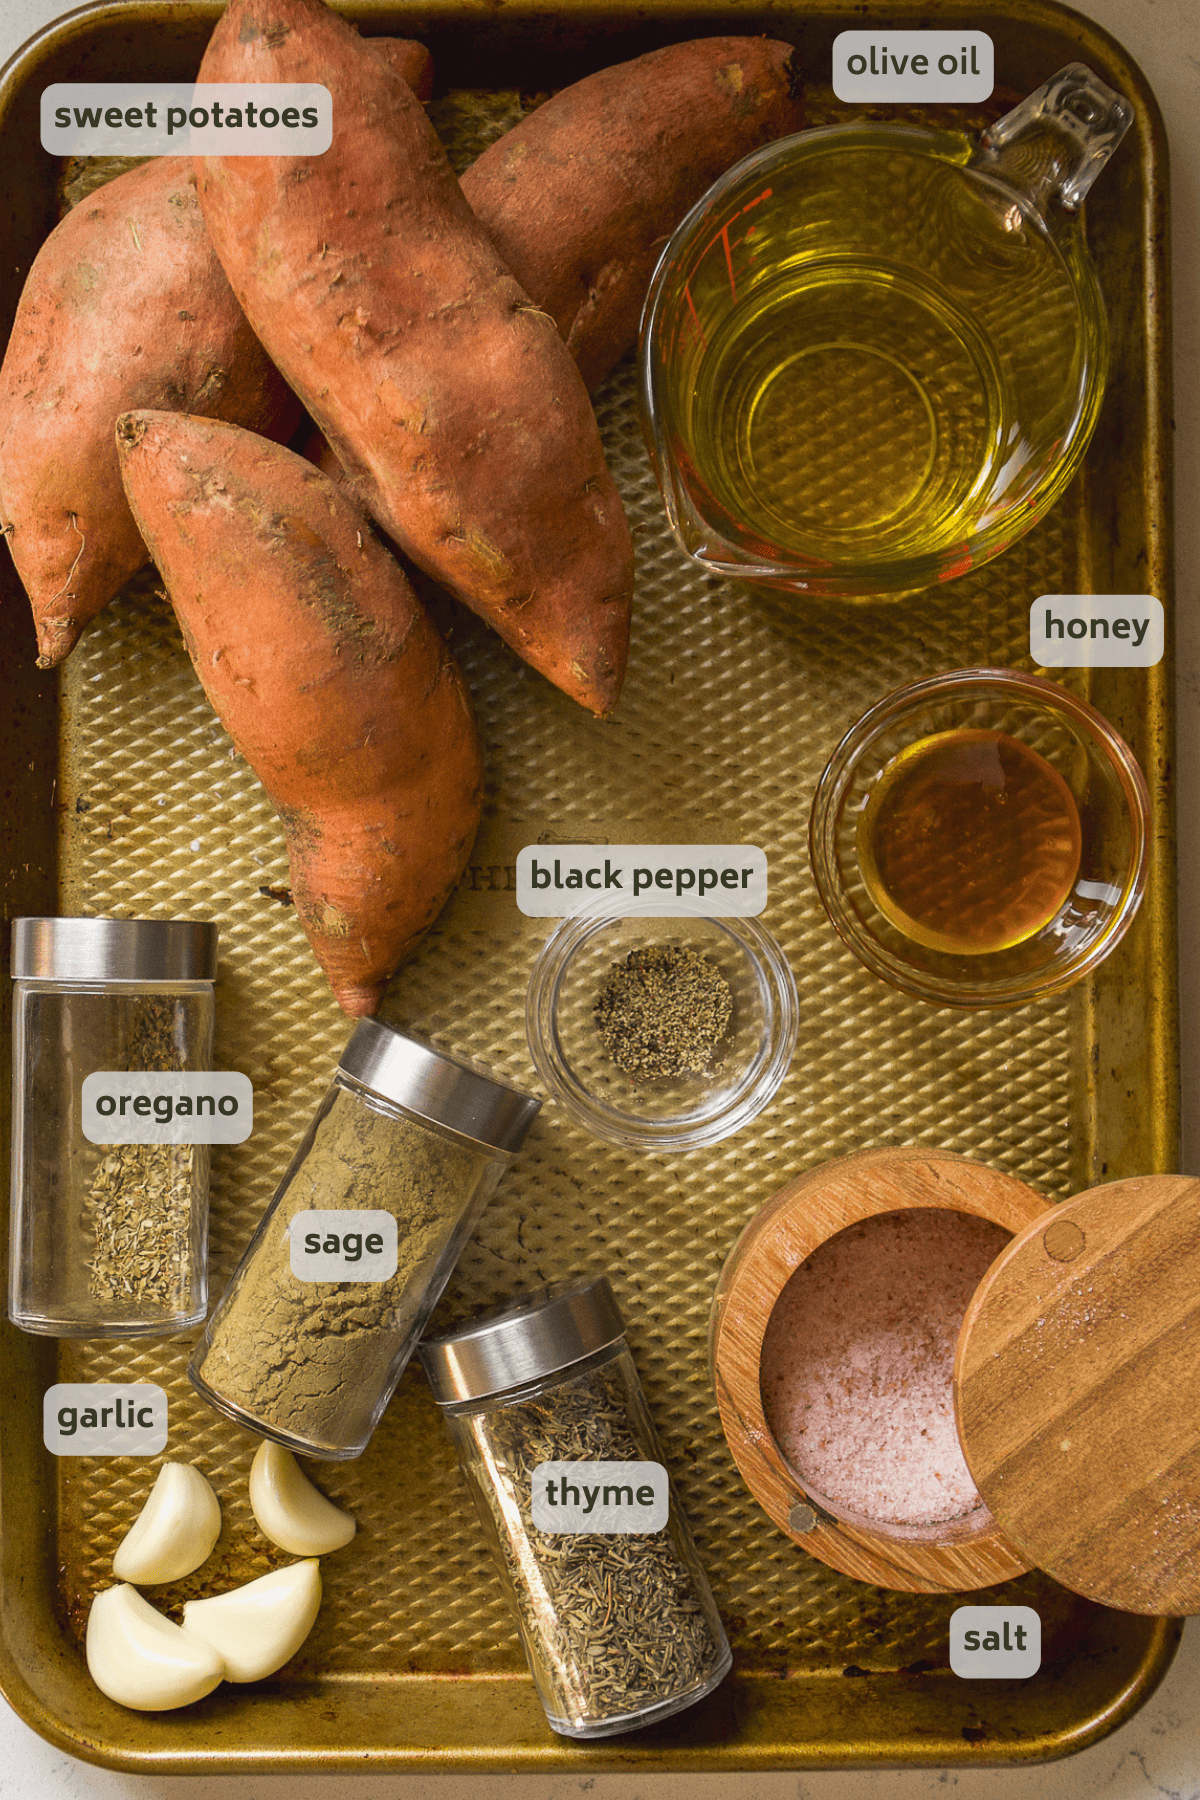 Scalloped sweet potato ingredients on a golden platter.